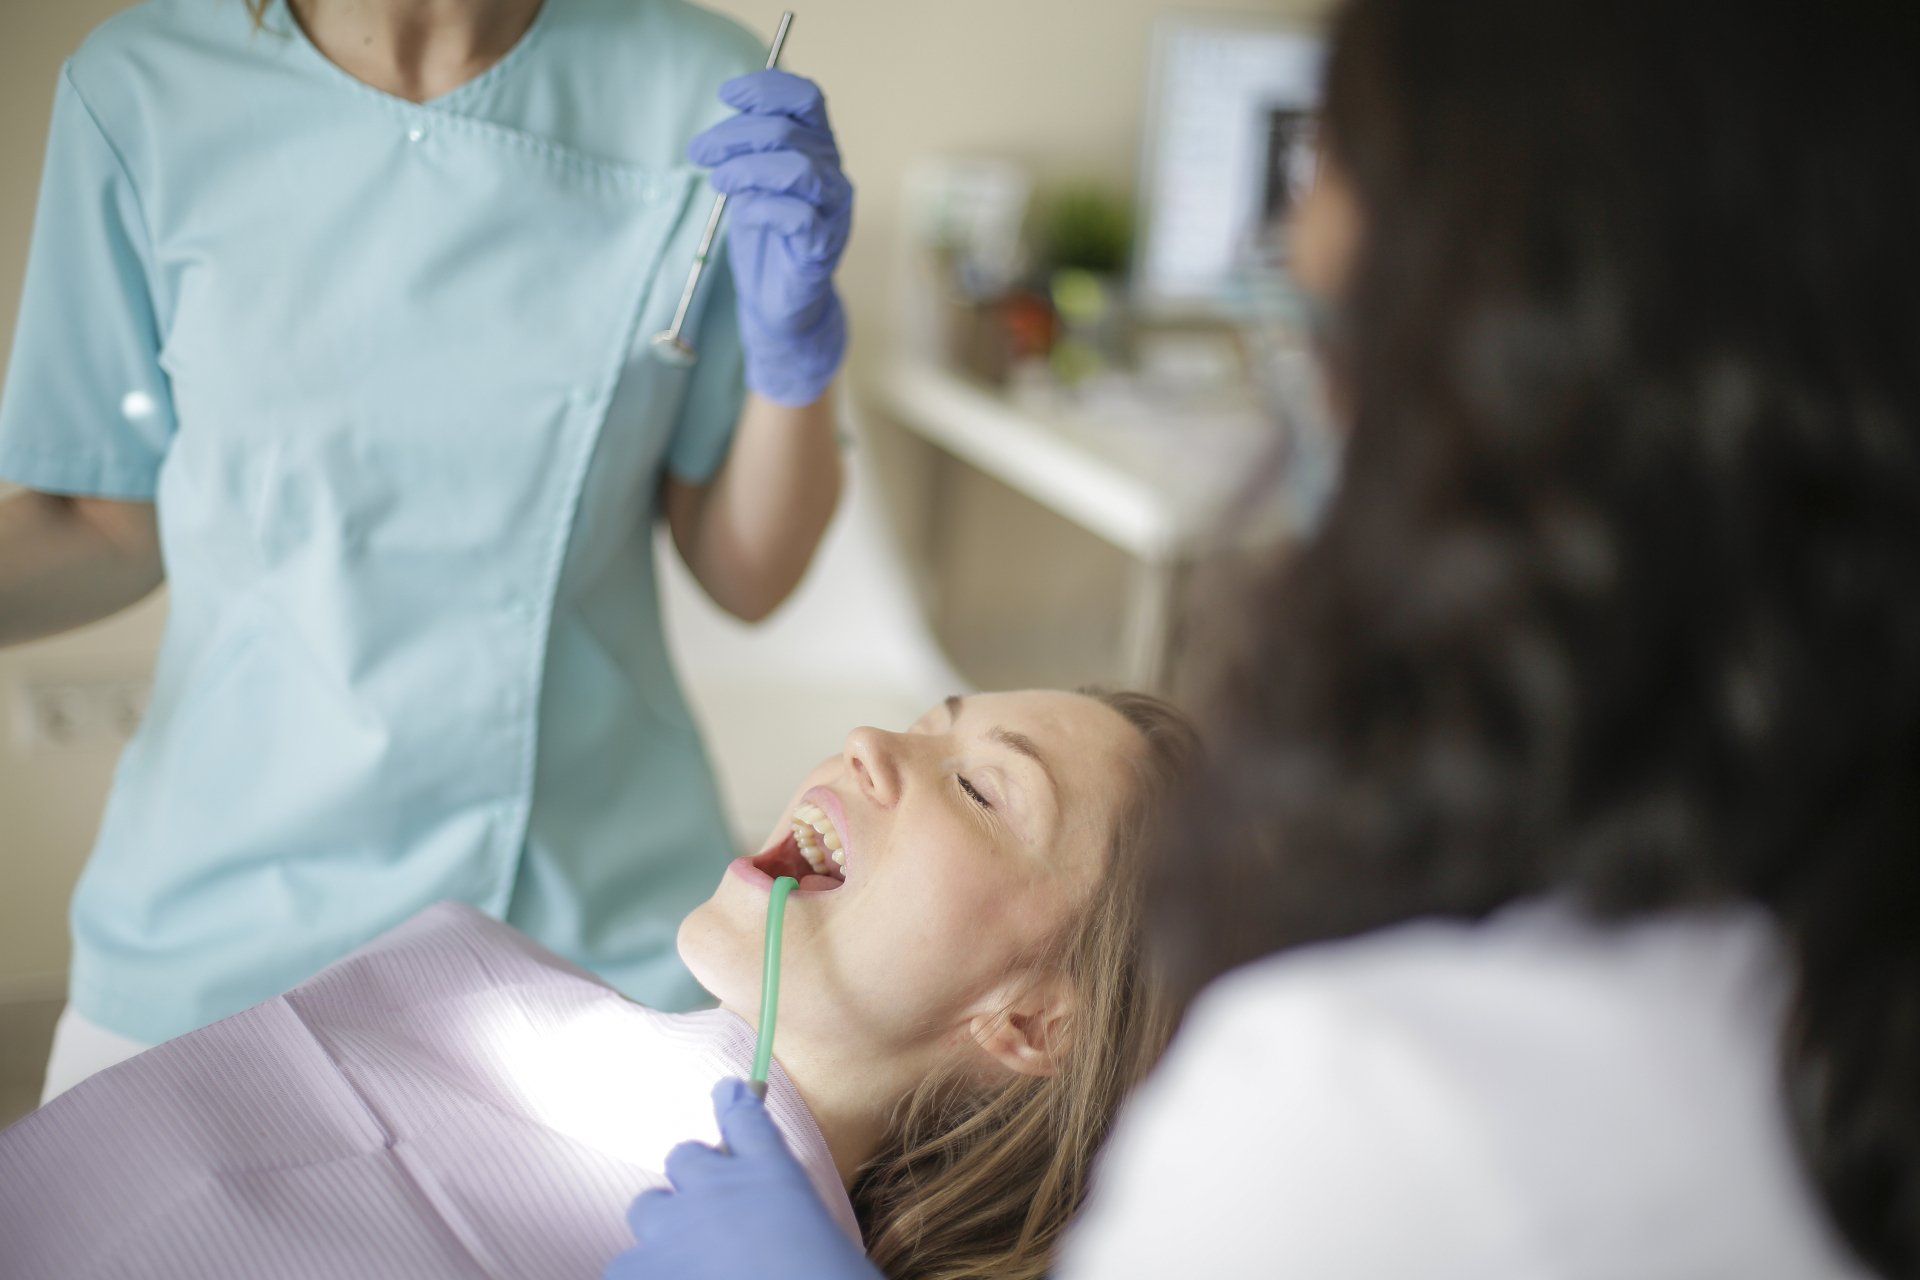 Teeth Whitening Treatment: Orthodontists, Dentists & Teeth Whitening LED Kits